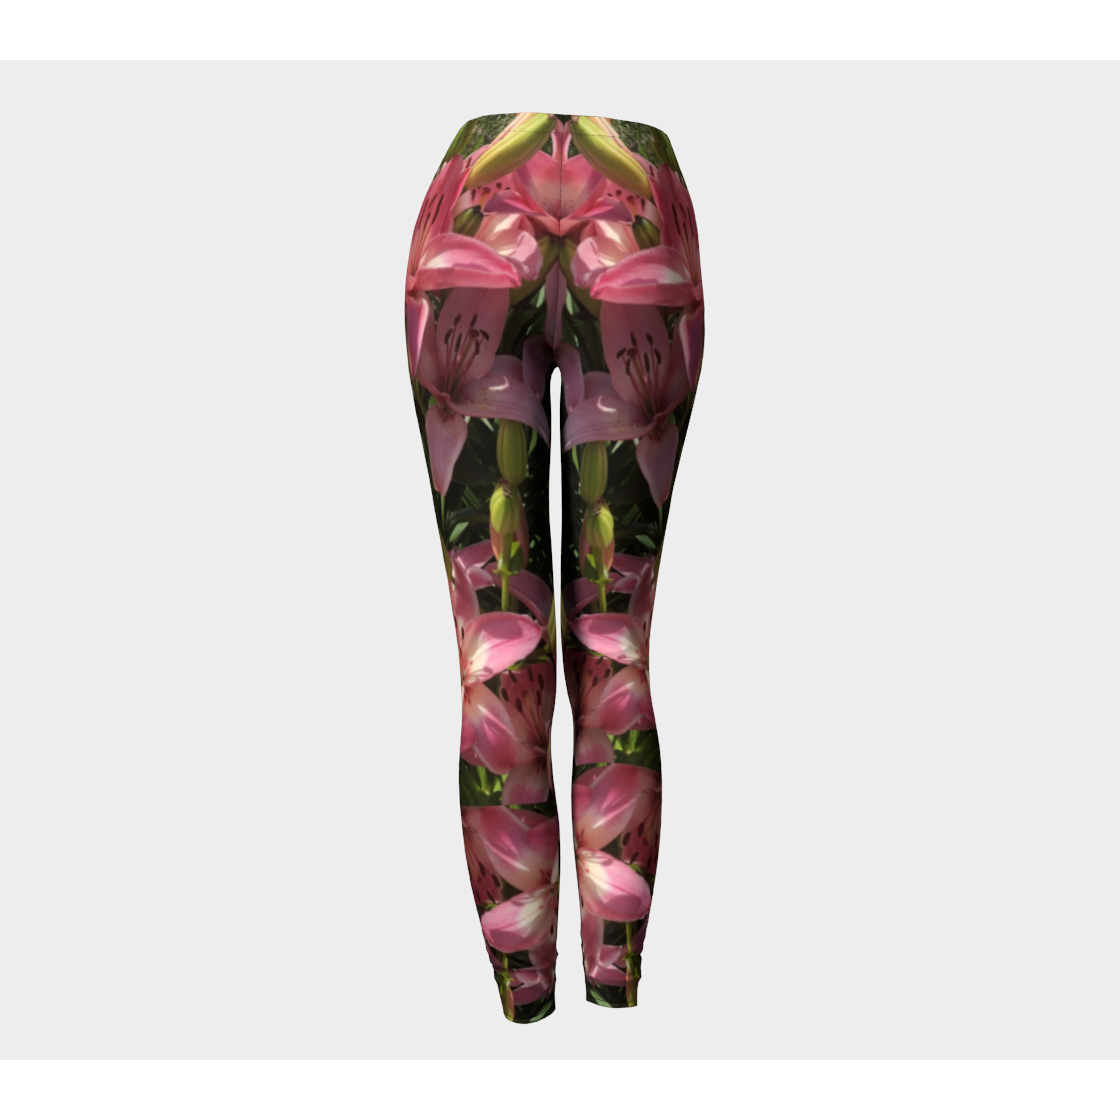 Leggings For Women with: Star Gazer Lily Design, Back